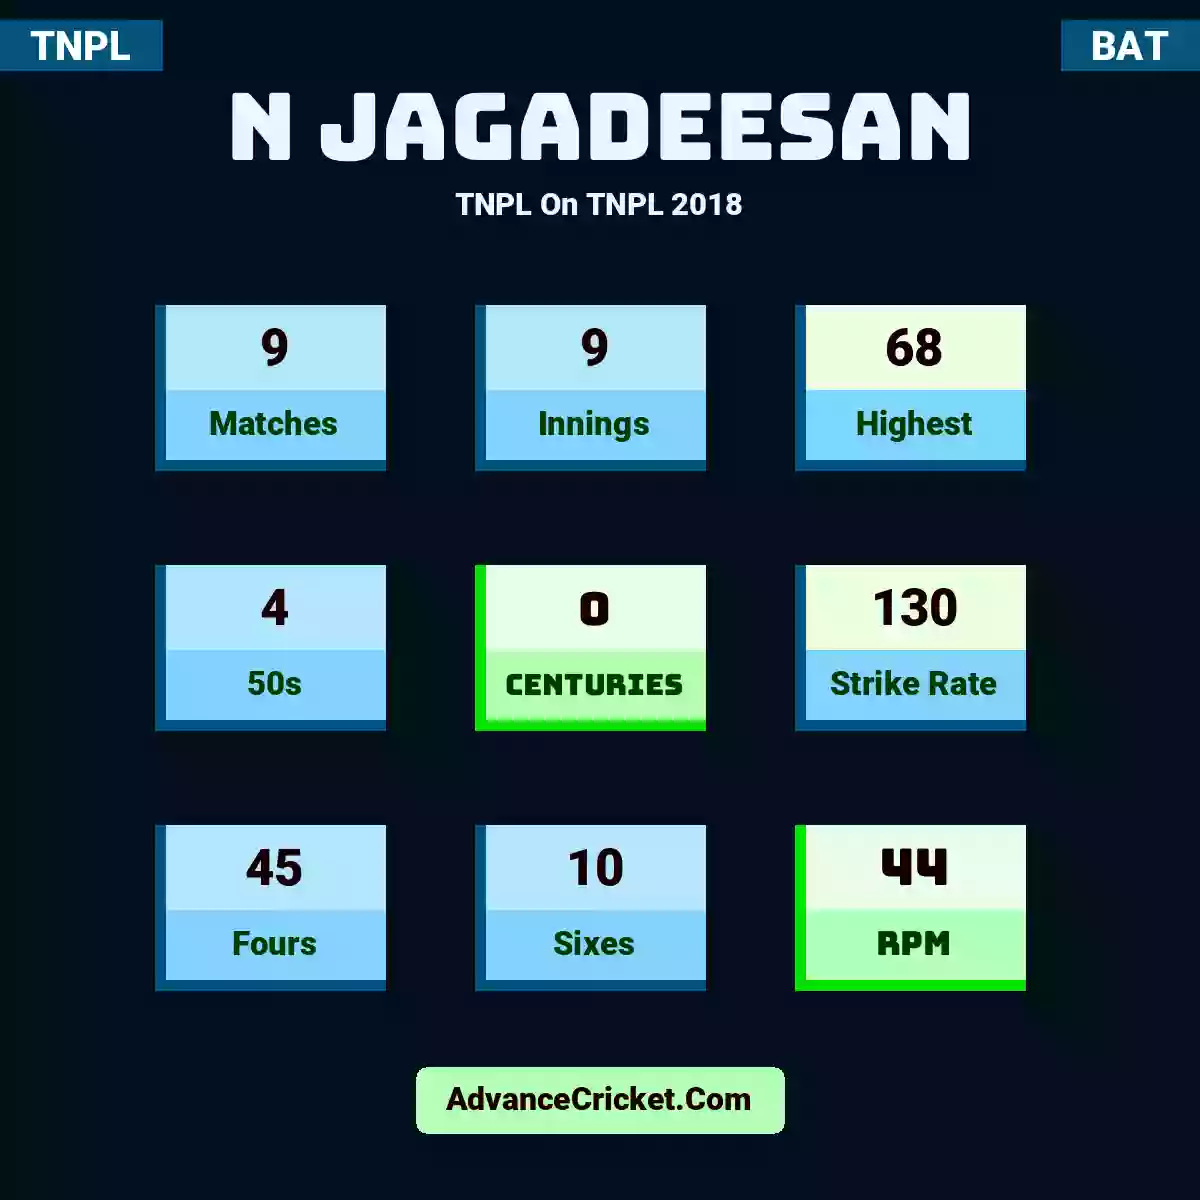 N Jagadeesan TNPL  On TNPL 2018, N Jagadeesan played 9 matches, scored 68 runs as highest, 4 half-centuries, and 0 centuries, with a strike rate of 130. N.Jagadeesan hit 45 fours and 10 sixes, with an RPM of 44.